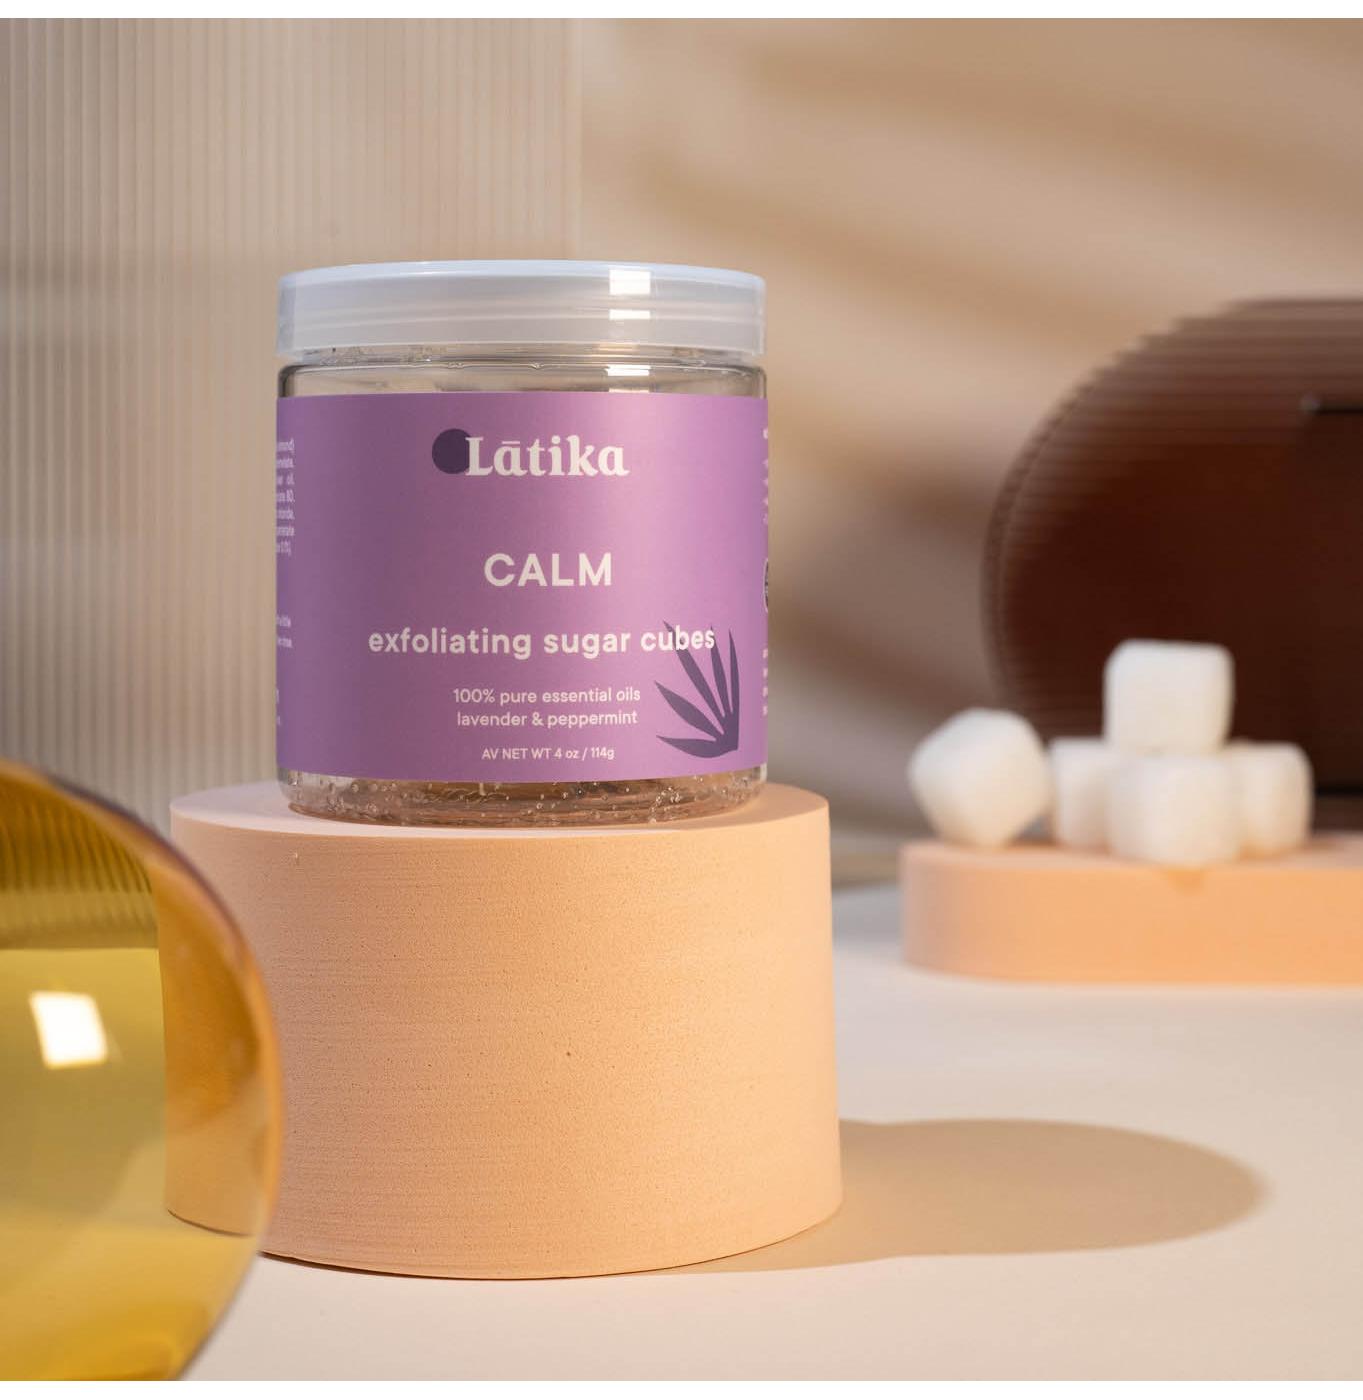 Latika Body Essentials Sugar Cubes Calm with Pure Essential Oils; image 4 of 4